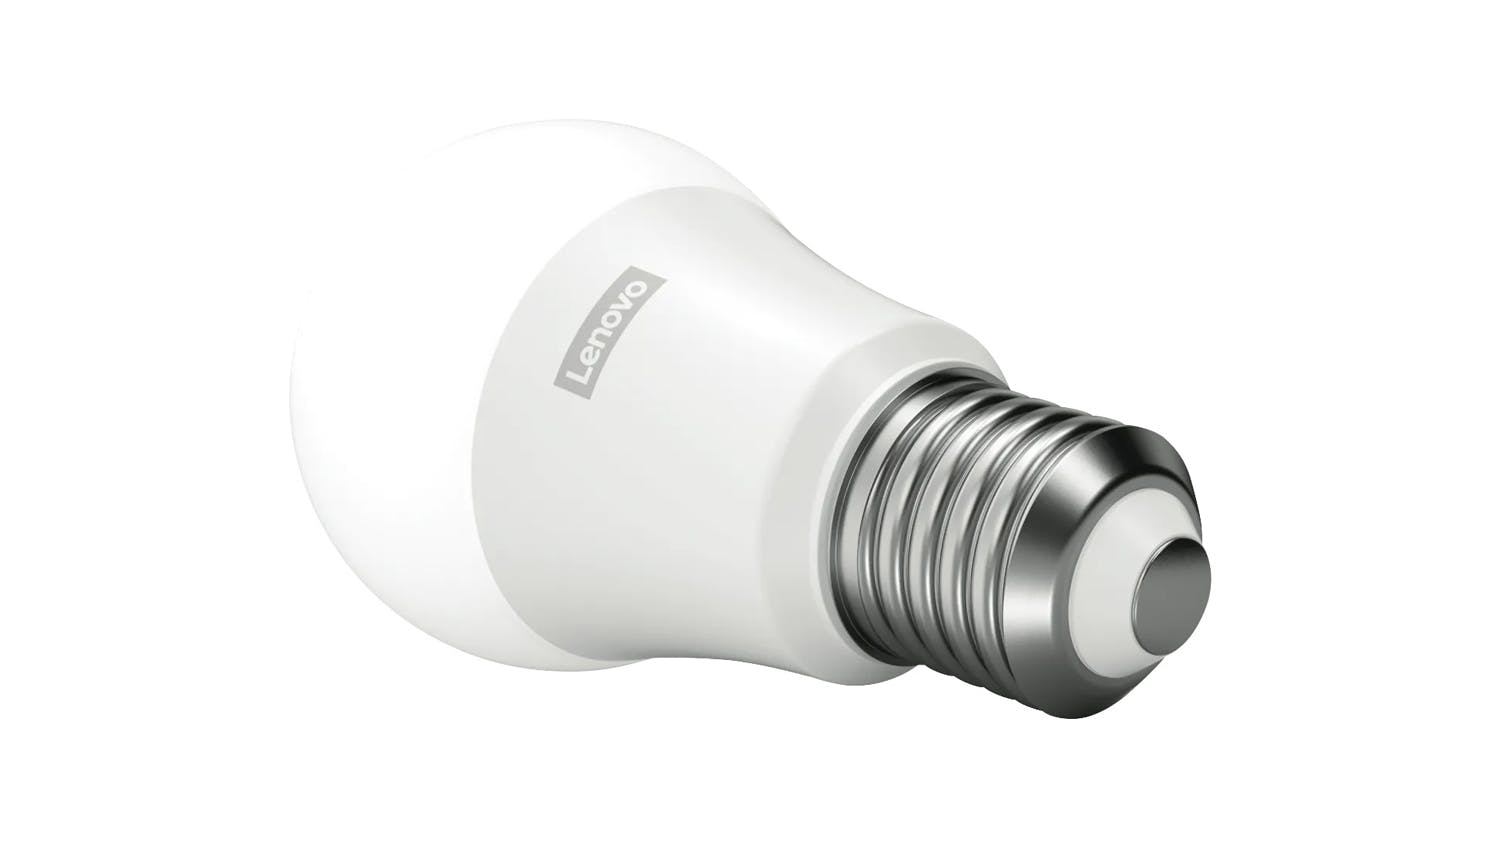 Lenovo Smart E27 Light Bulb - White